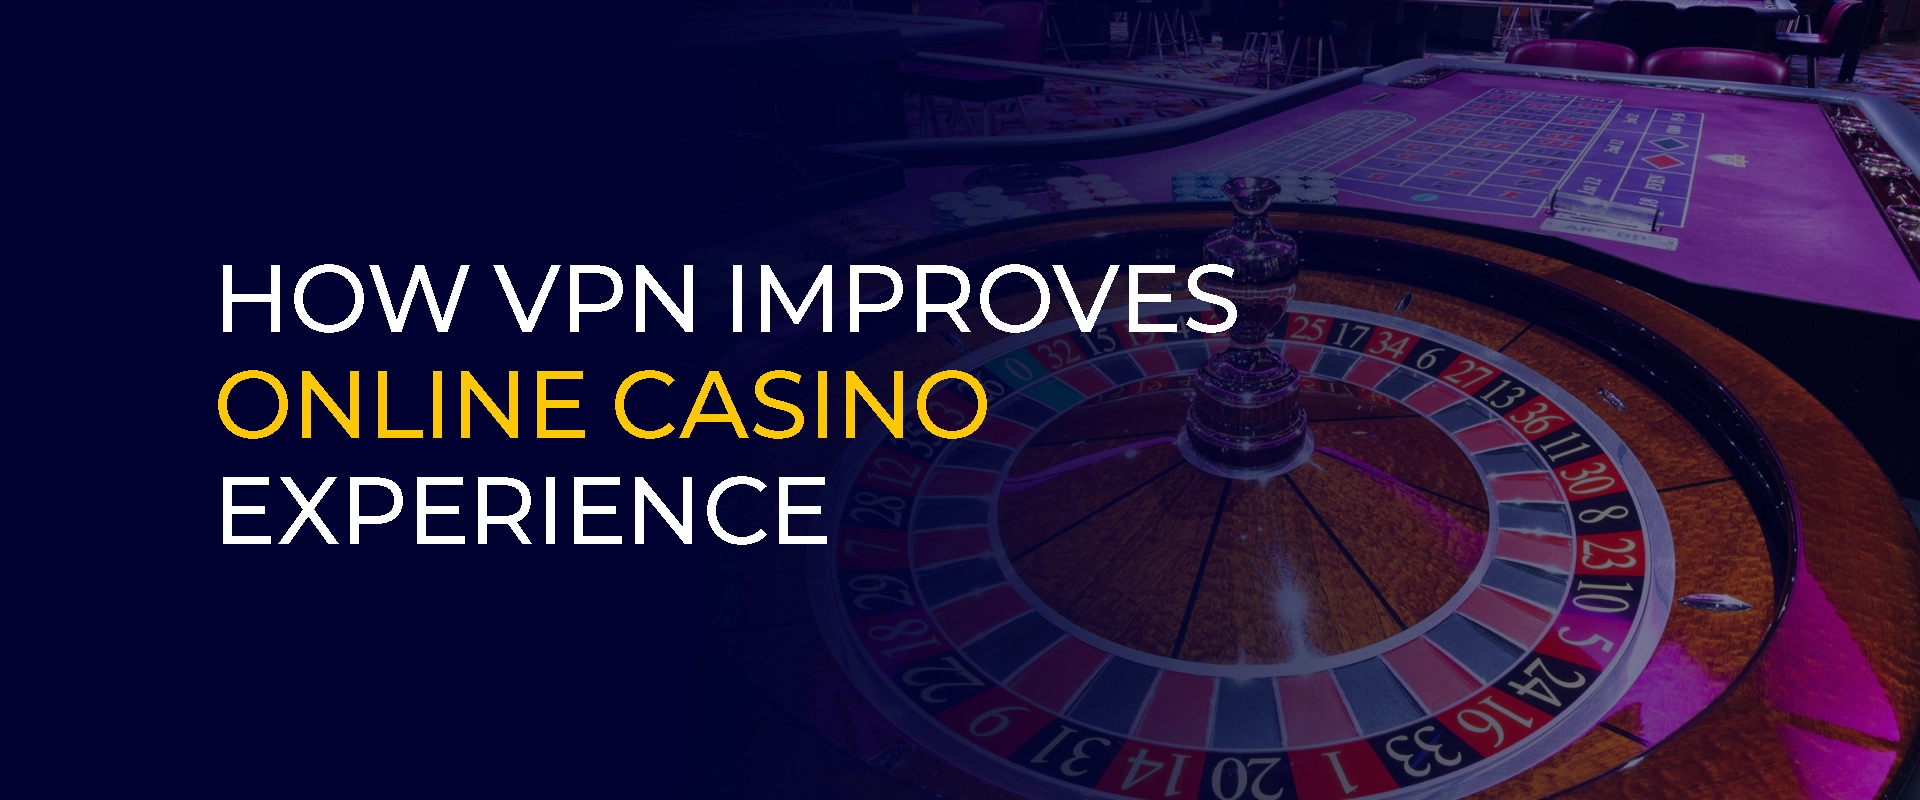 How VPN Improves Online Casino Experience